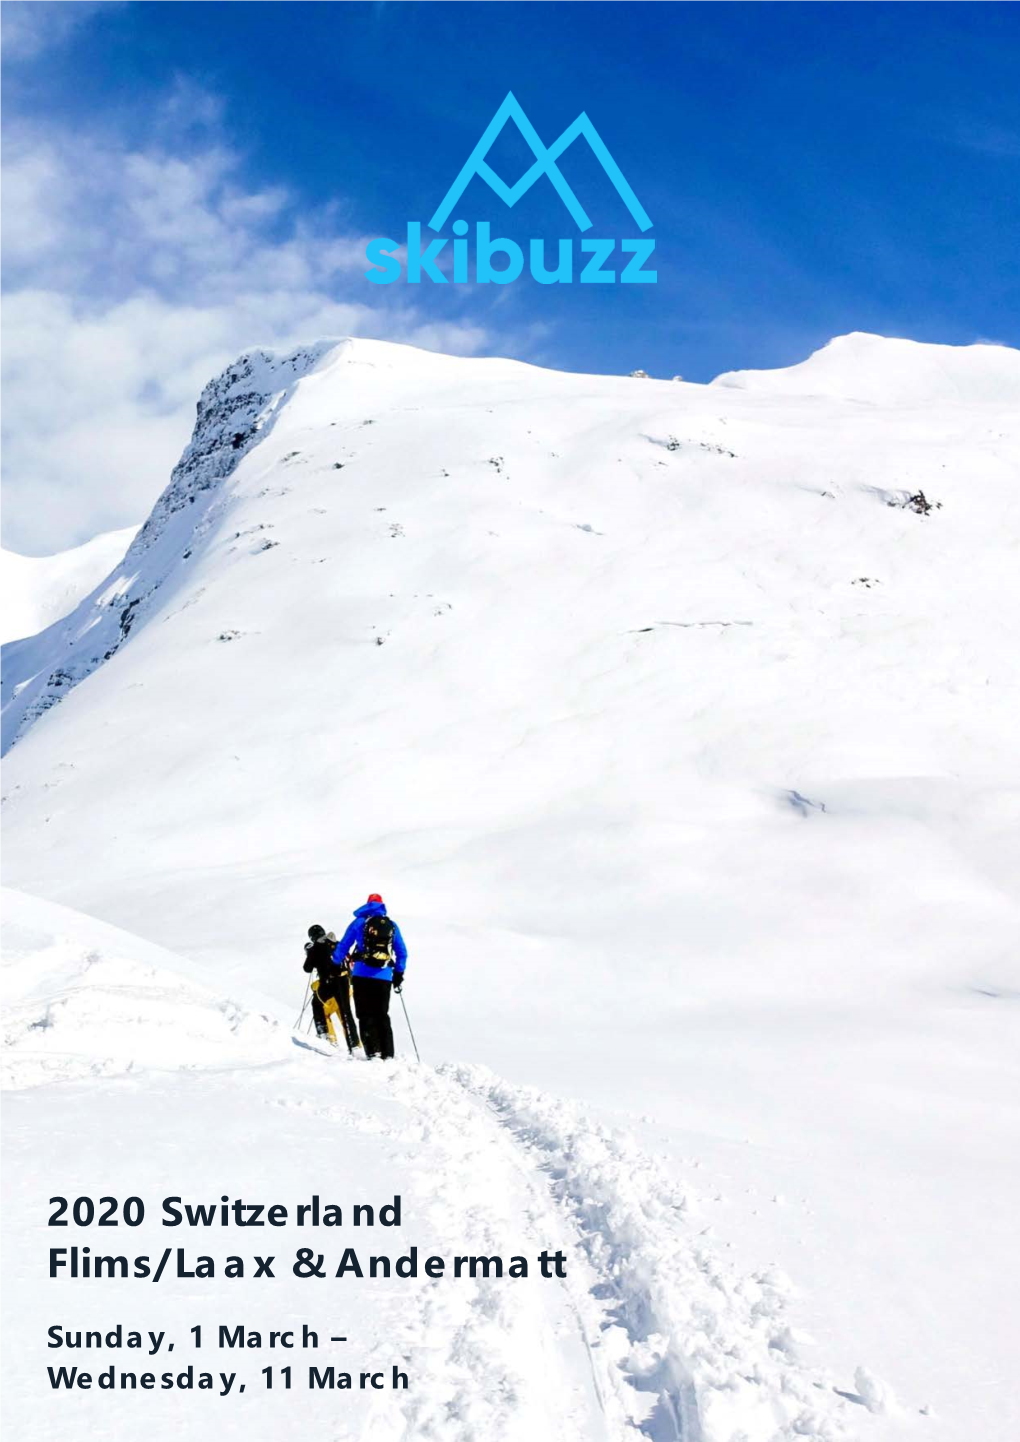 2020 Switzerland Flims/Laax & Andermatt